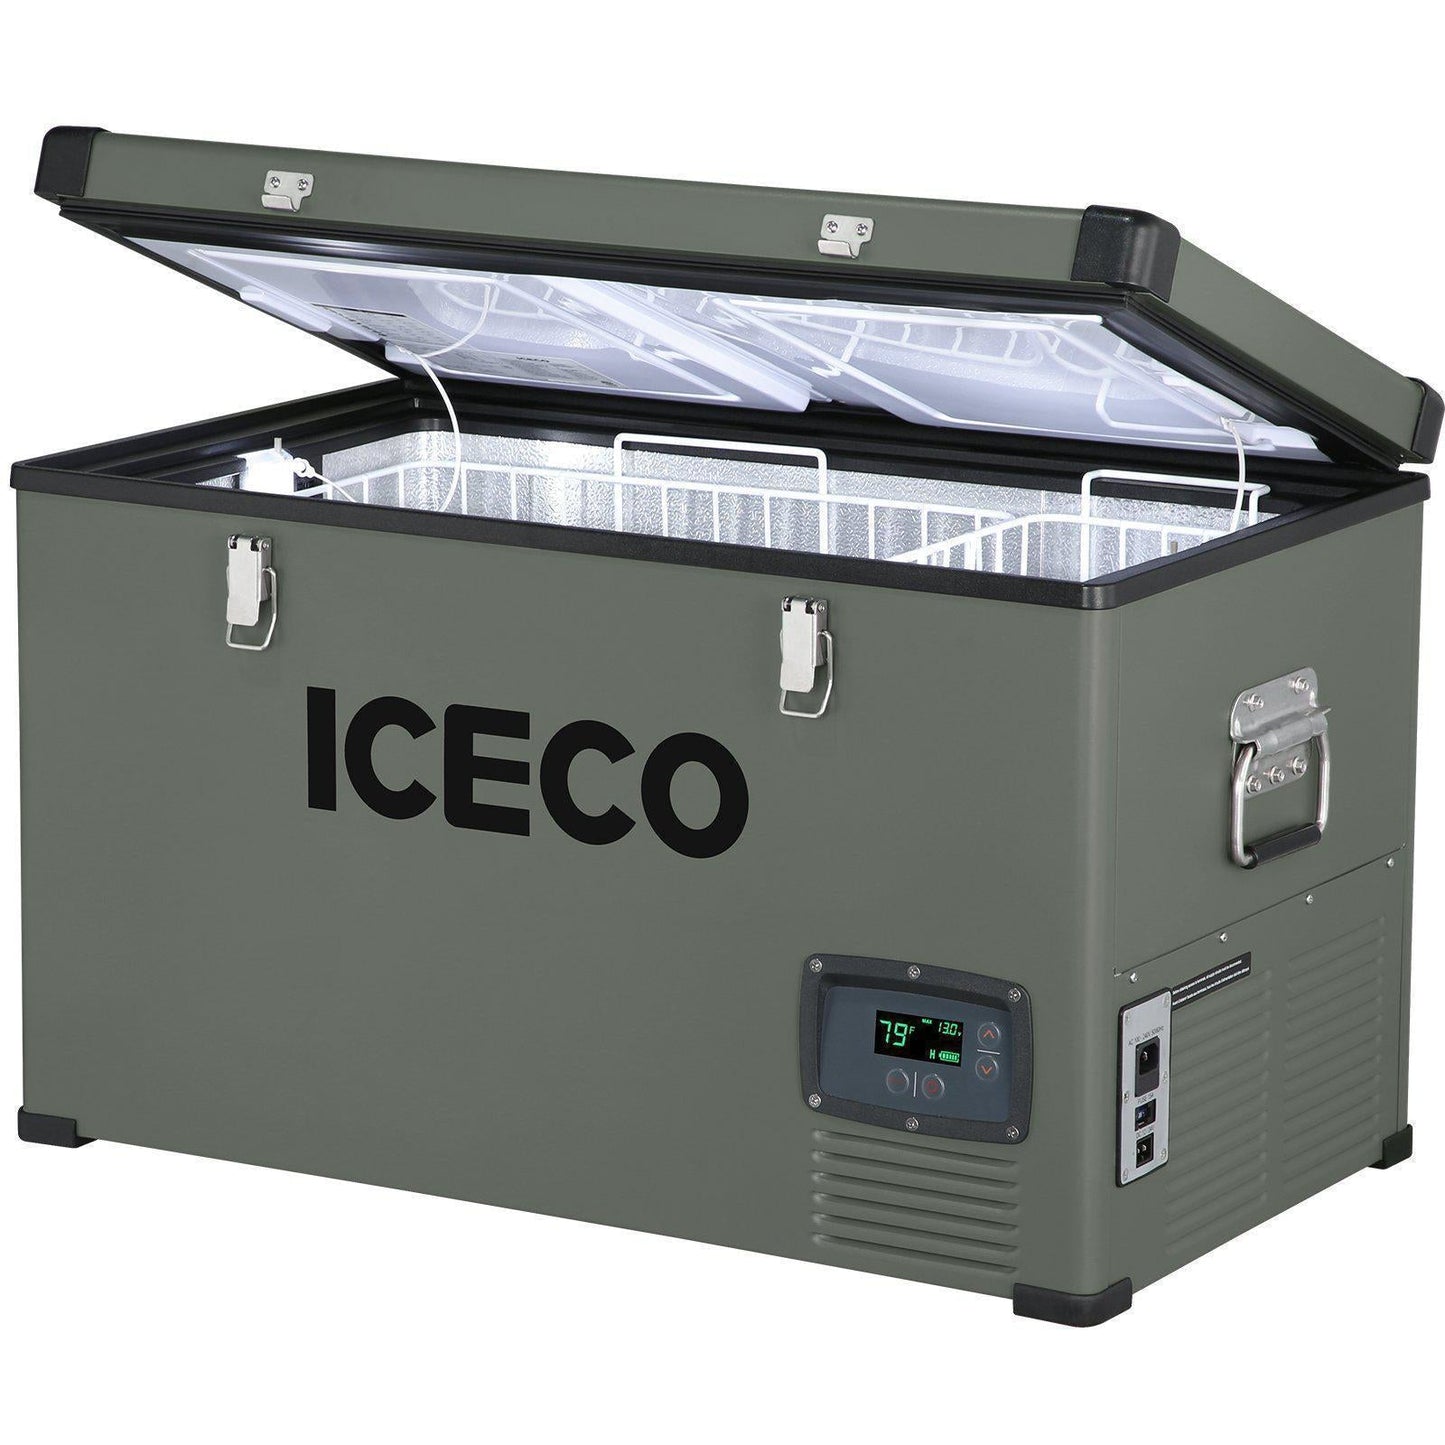 ICECO 78QT VL74 Single Zone Portable Fridge Freezer